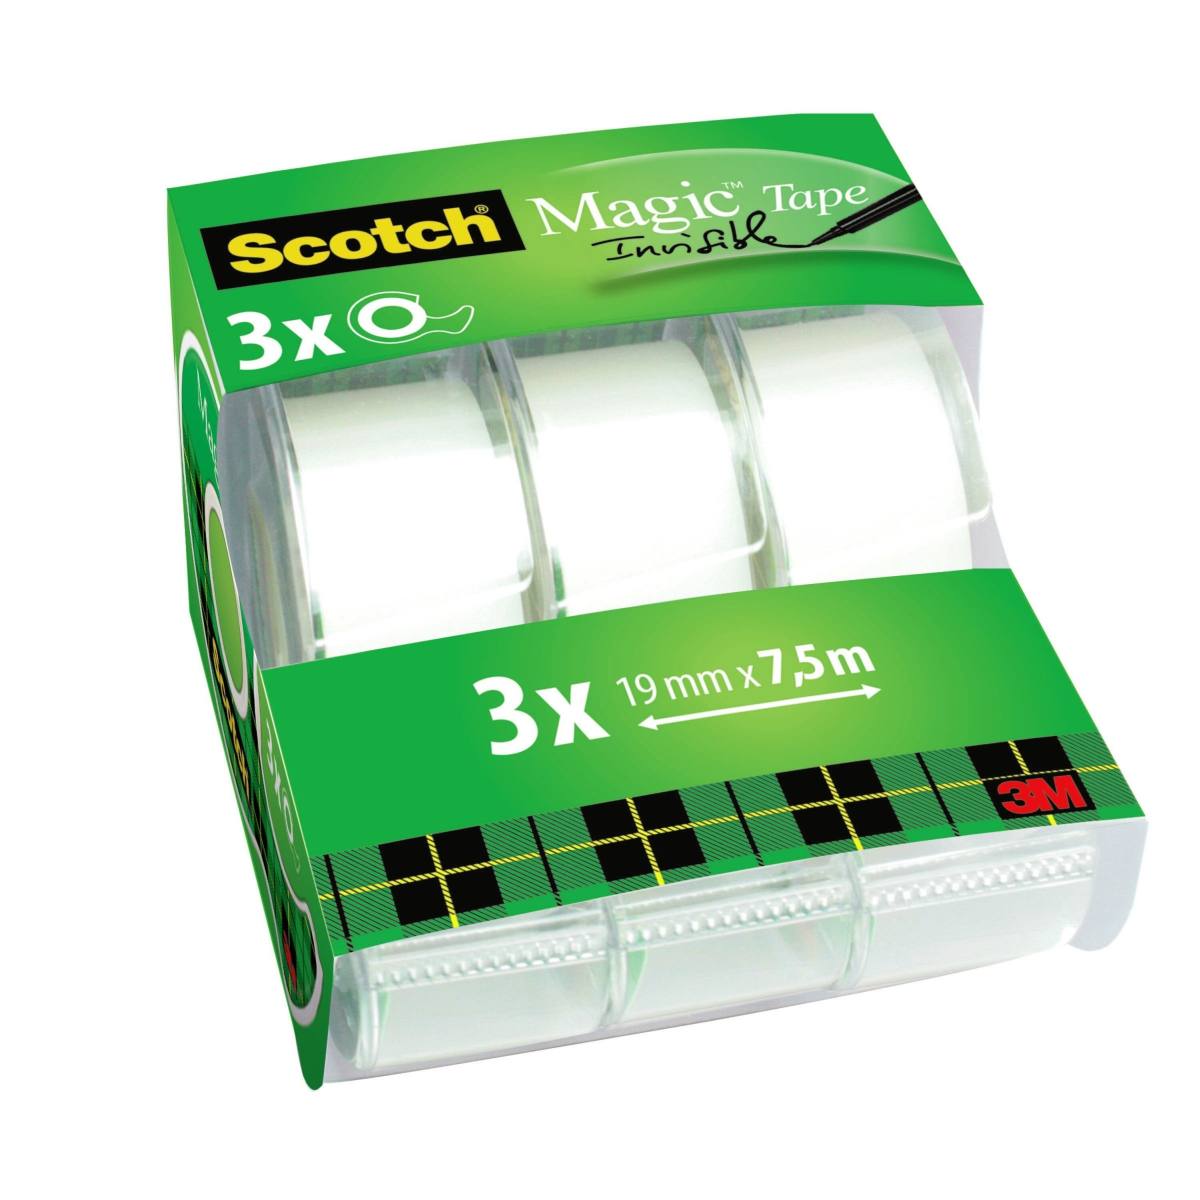 3M Scotch Magic Adhesive Tape Caddy Pack, 3 rolls in hand dispensers 19 mm x 7.5 m